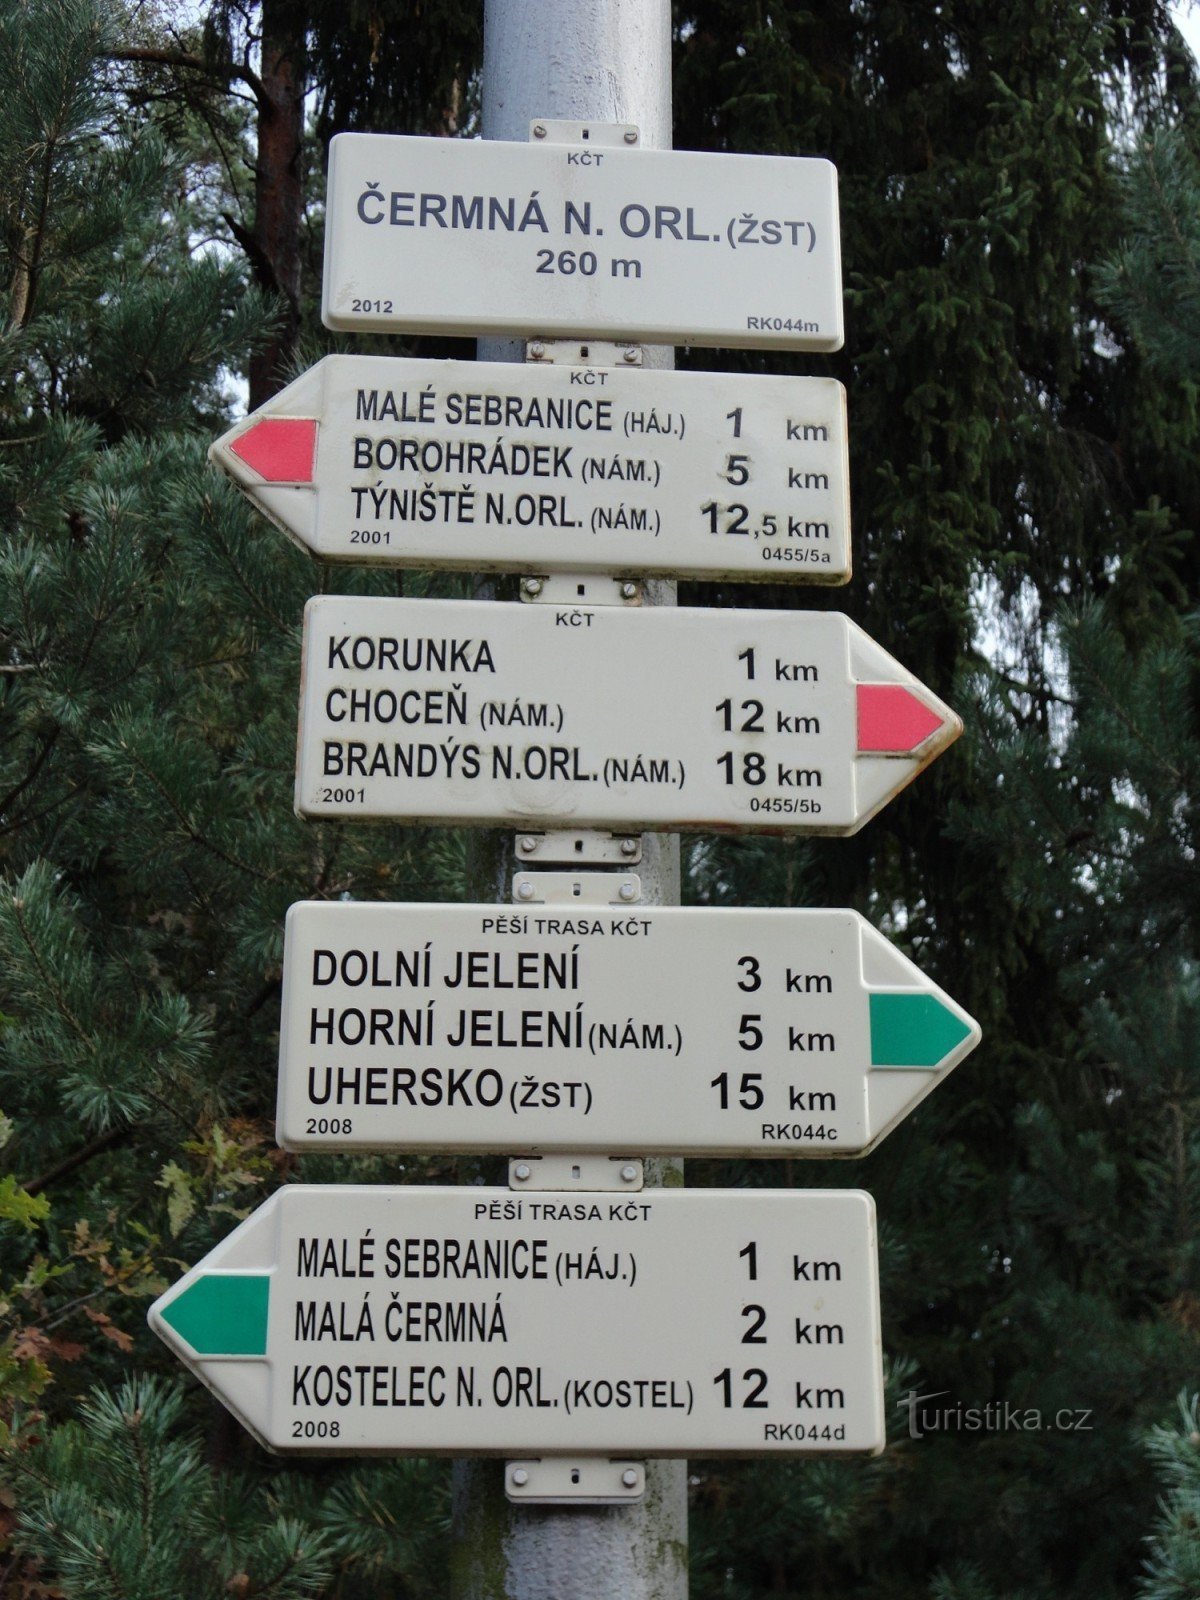 encrucijada turística Čermná nad Orlicí - ferrocarril